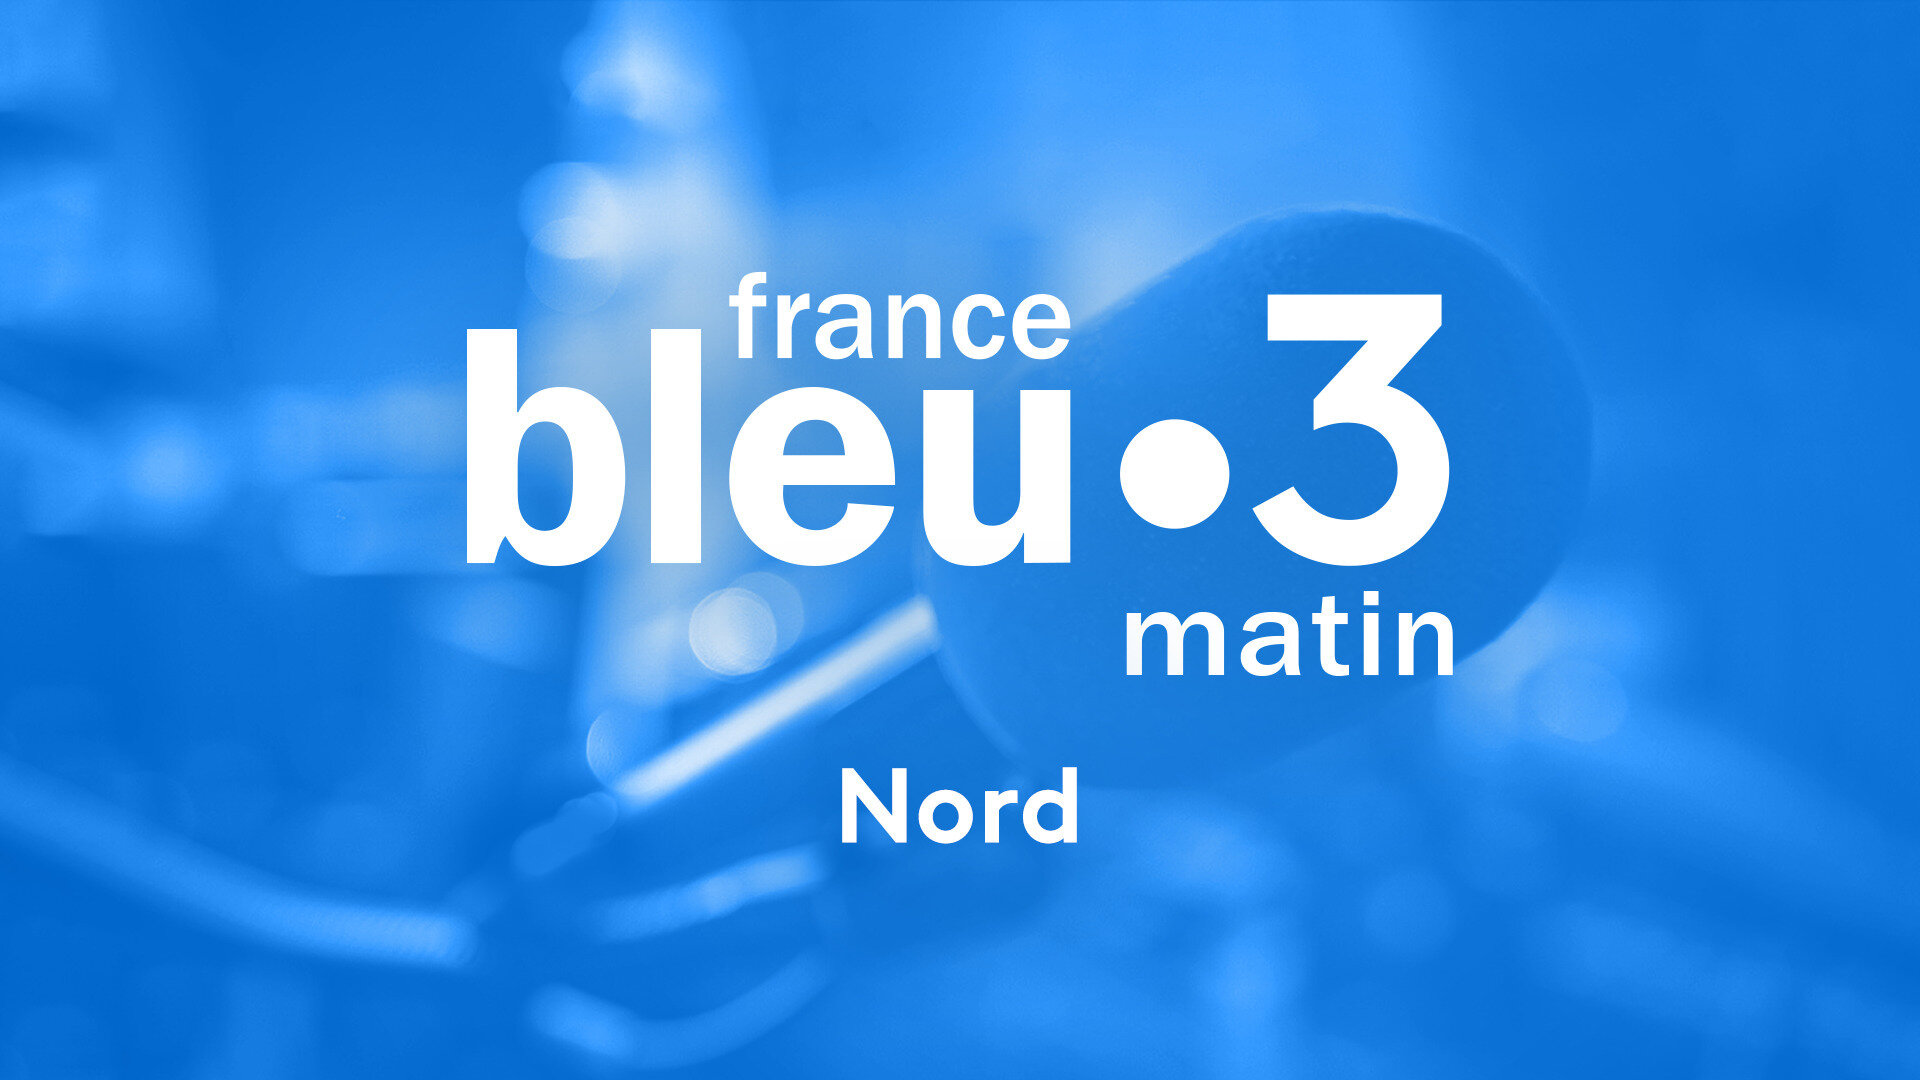 France Bleu Nord France 3 Matin